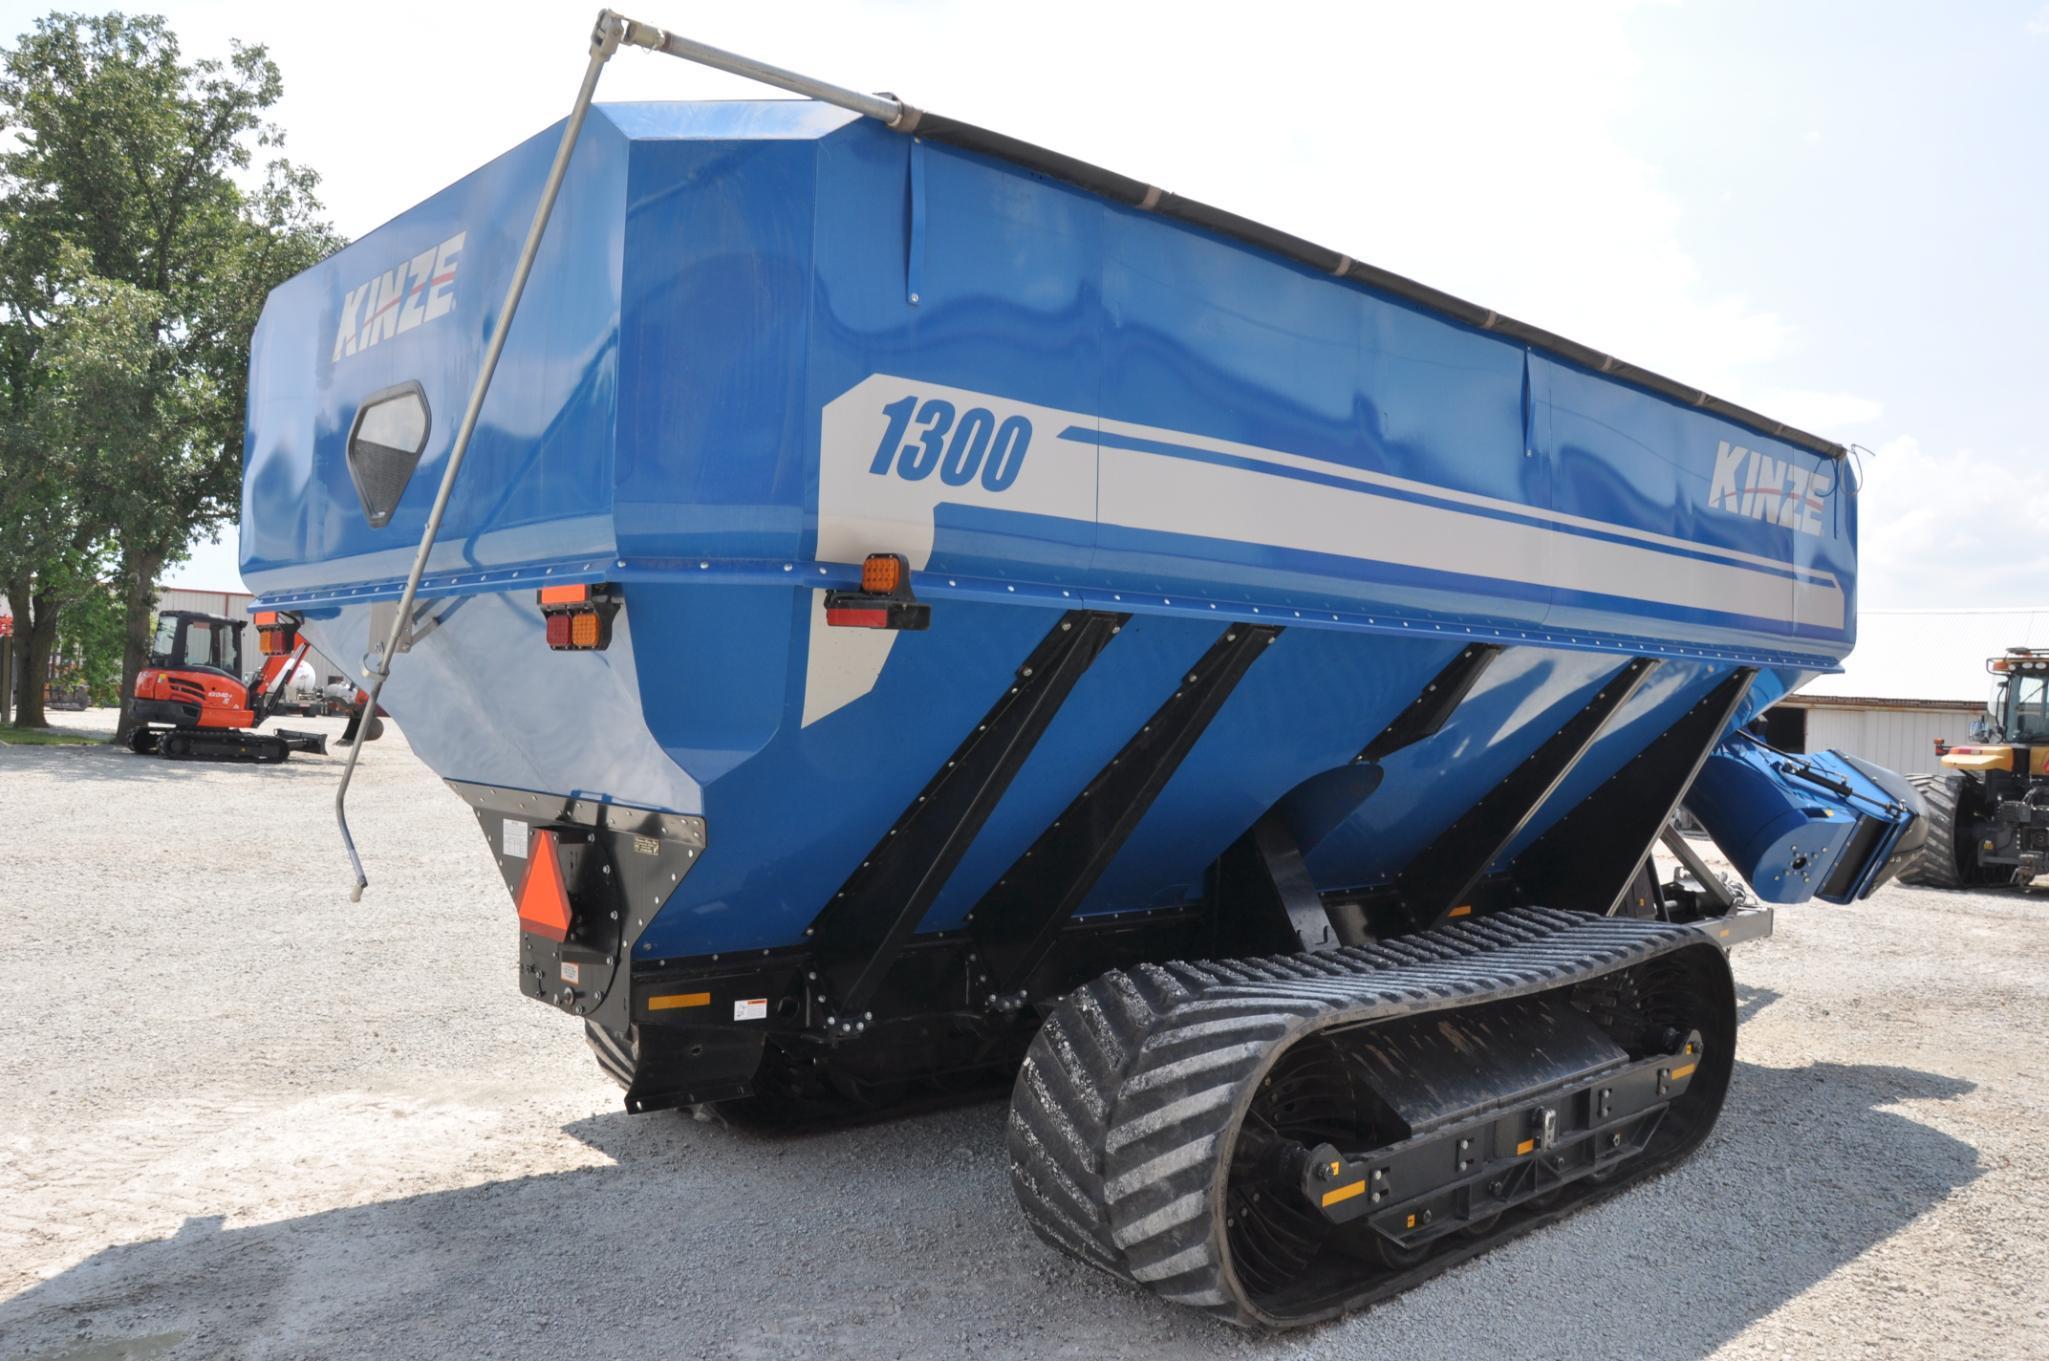 2014 Kinze 1300 grain cart